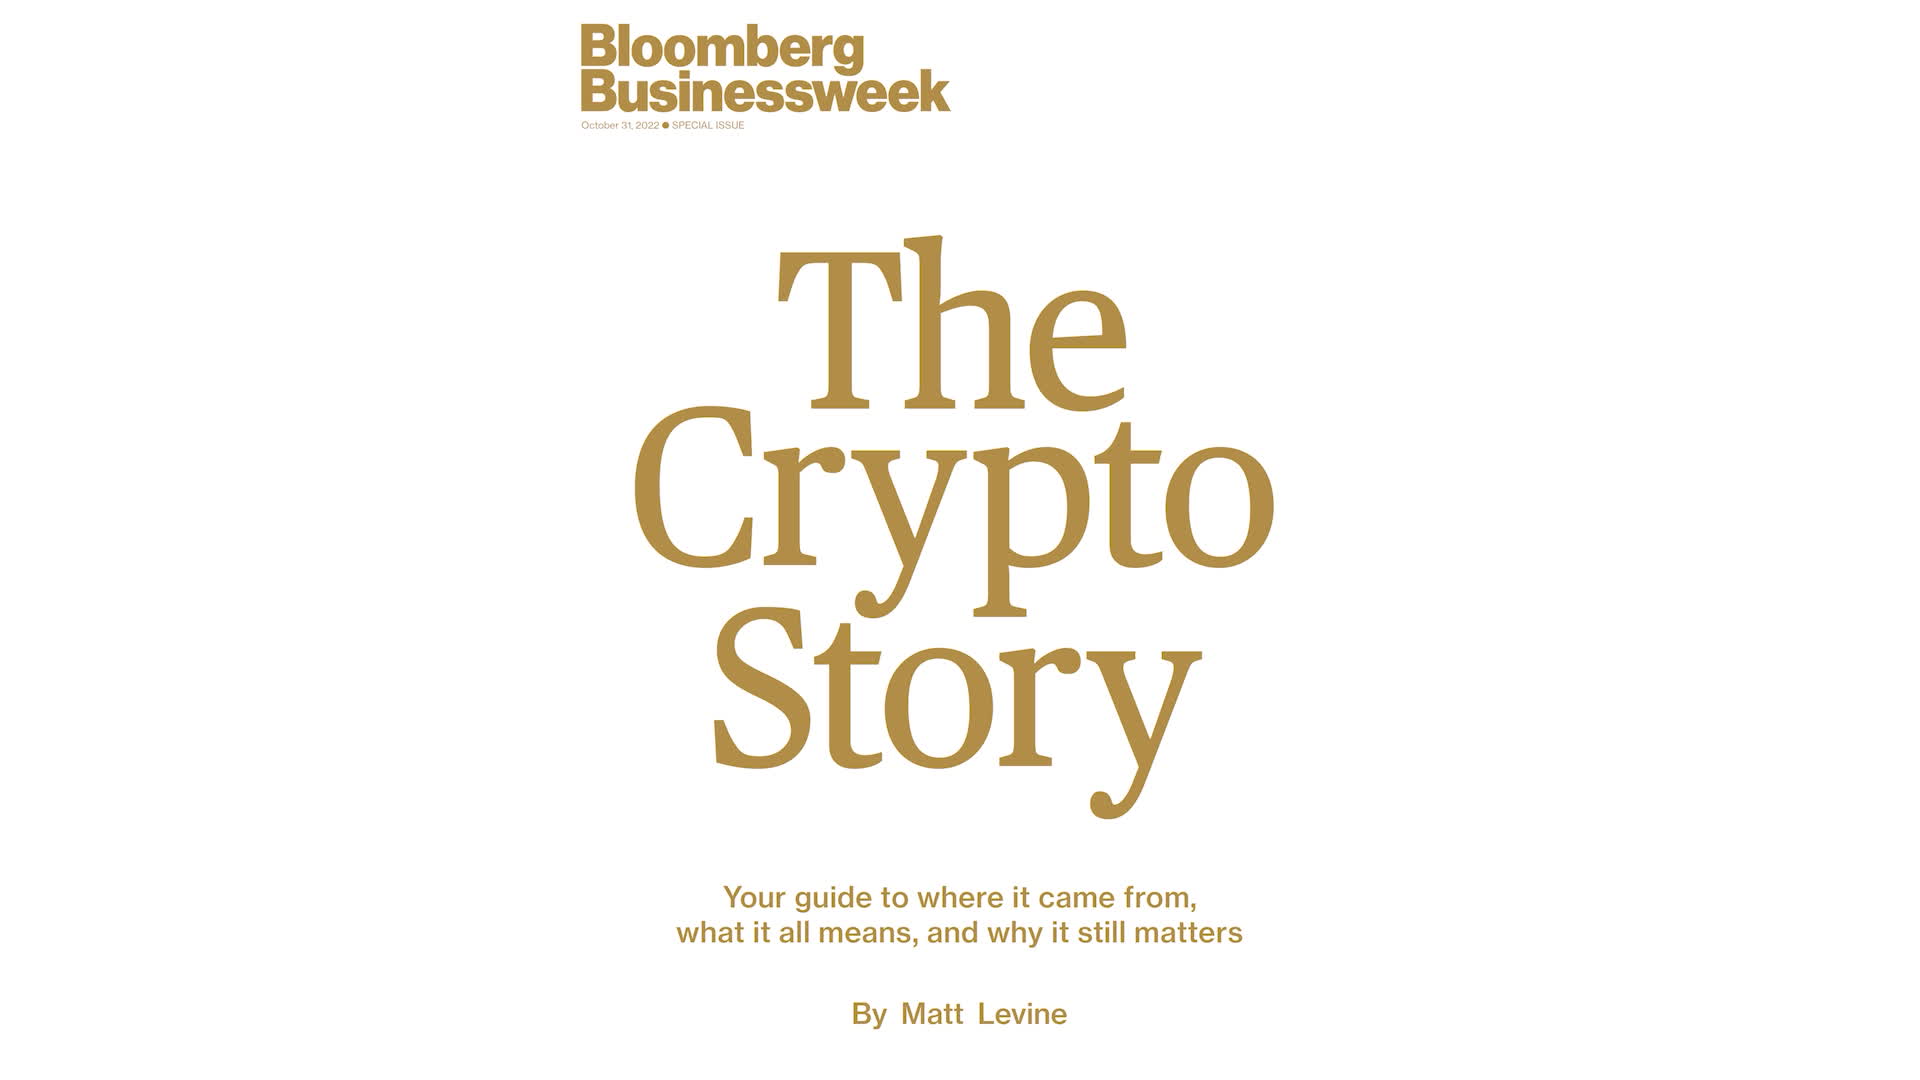 Why Crypto Still Matters: Matt Levine